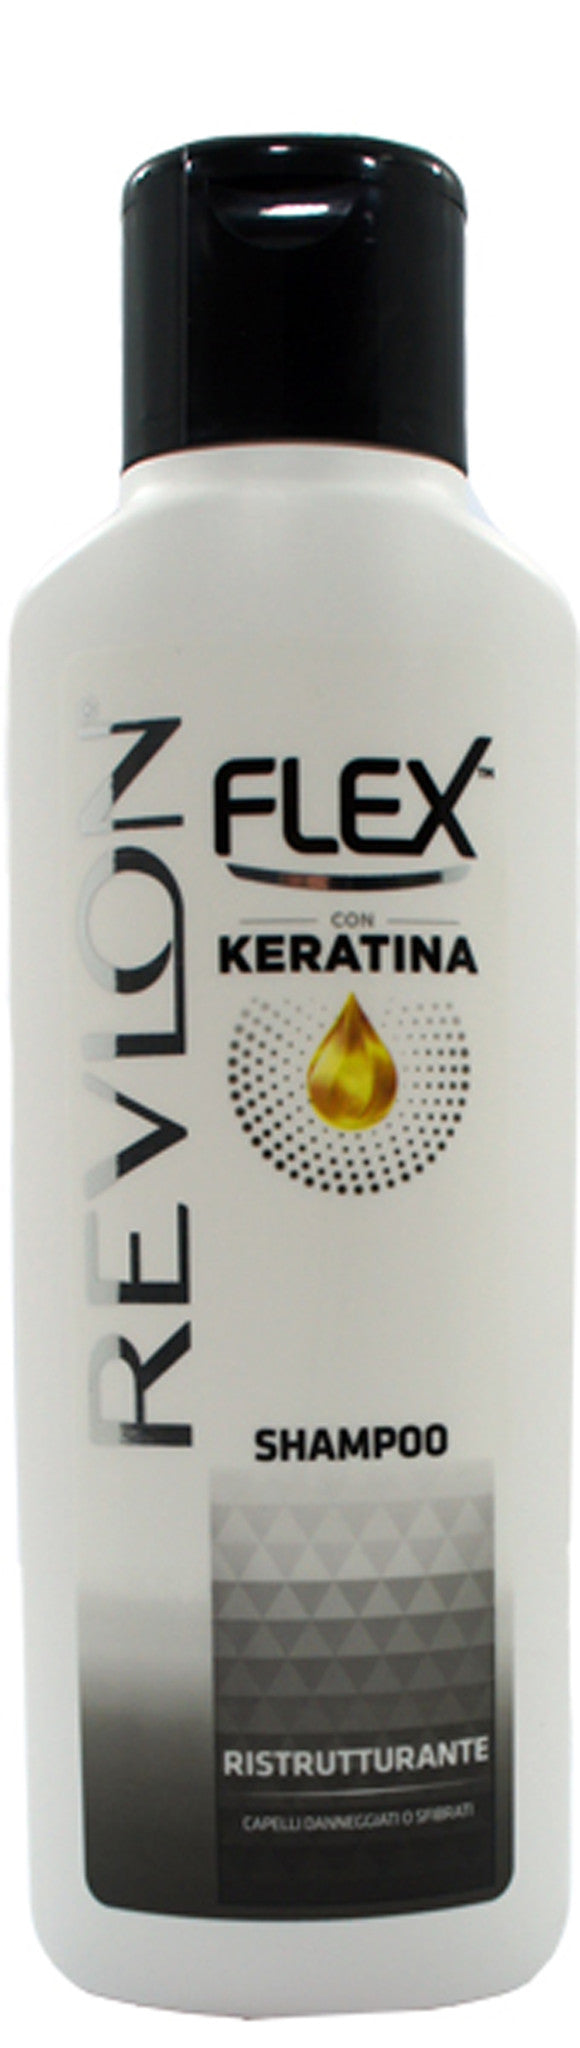 Revlon Flex Keratina Shampoo Ristrutturante - 400 ml - RossoLaccaStore